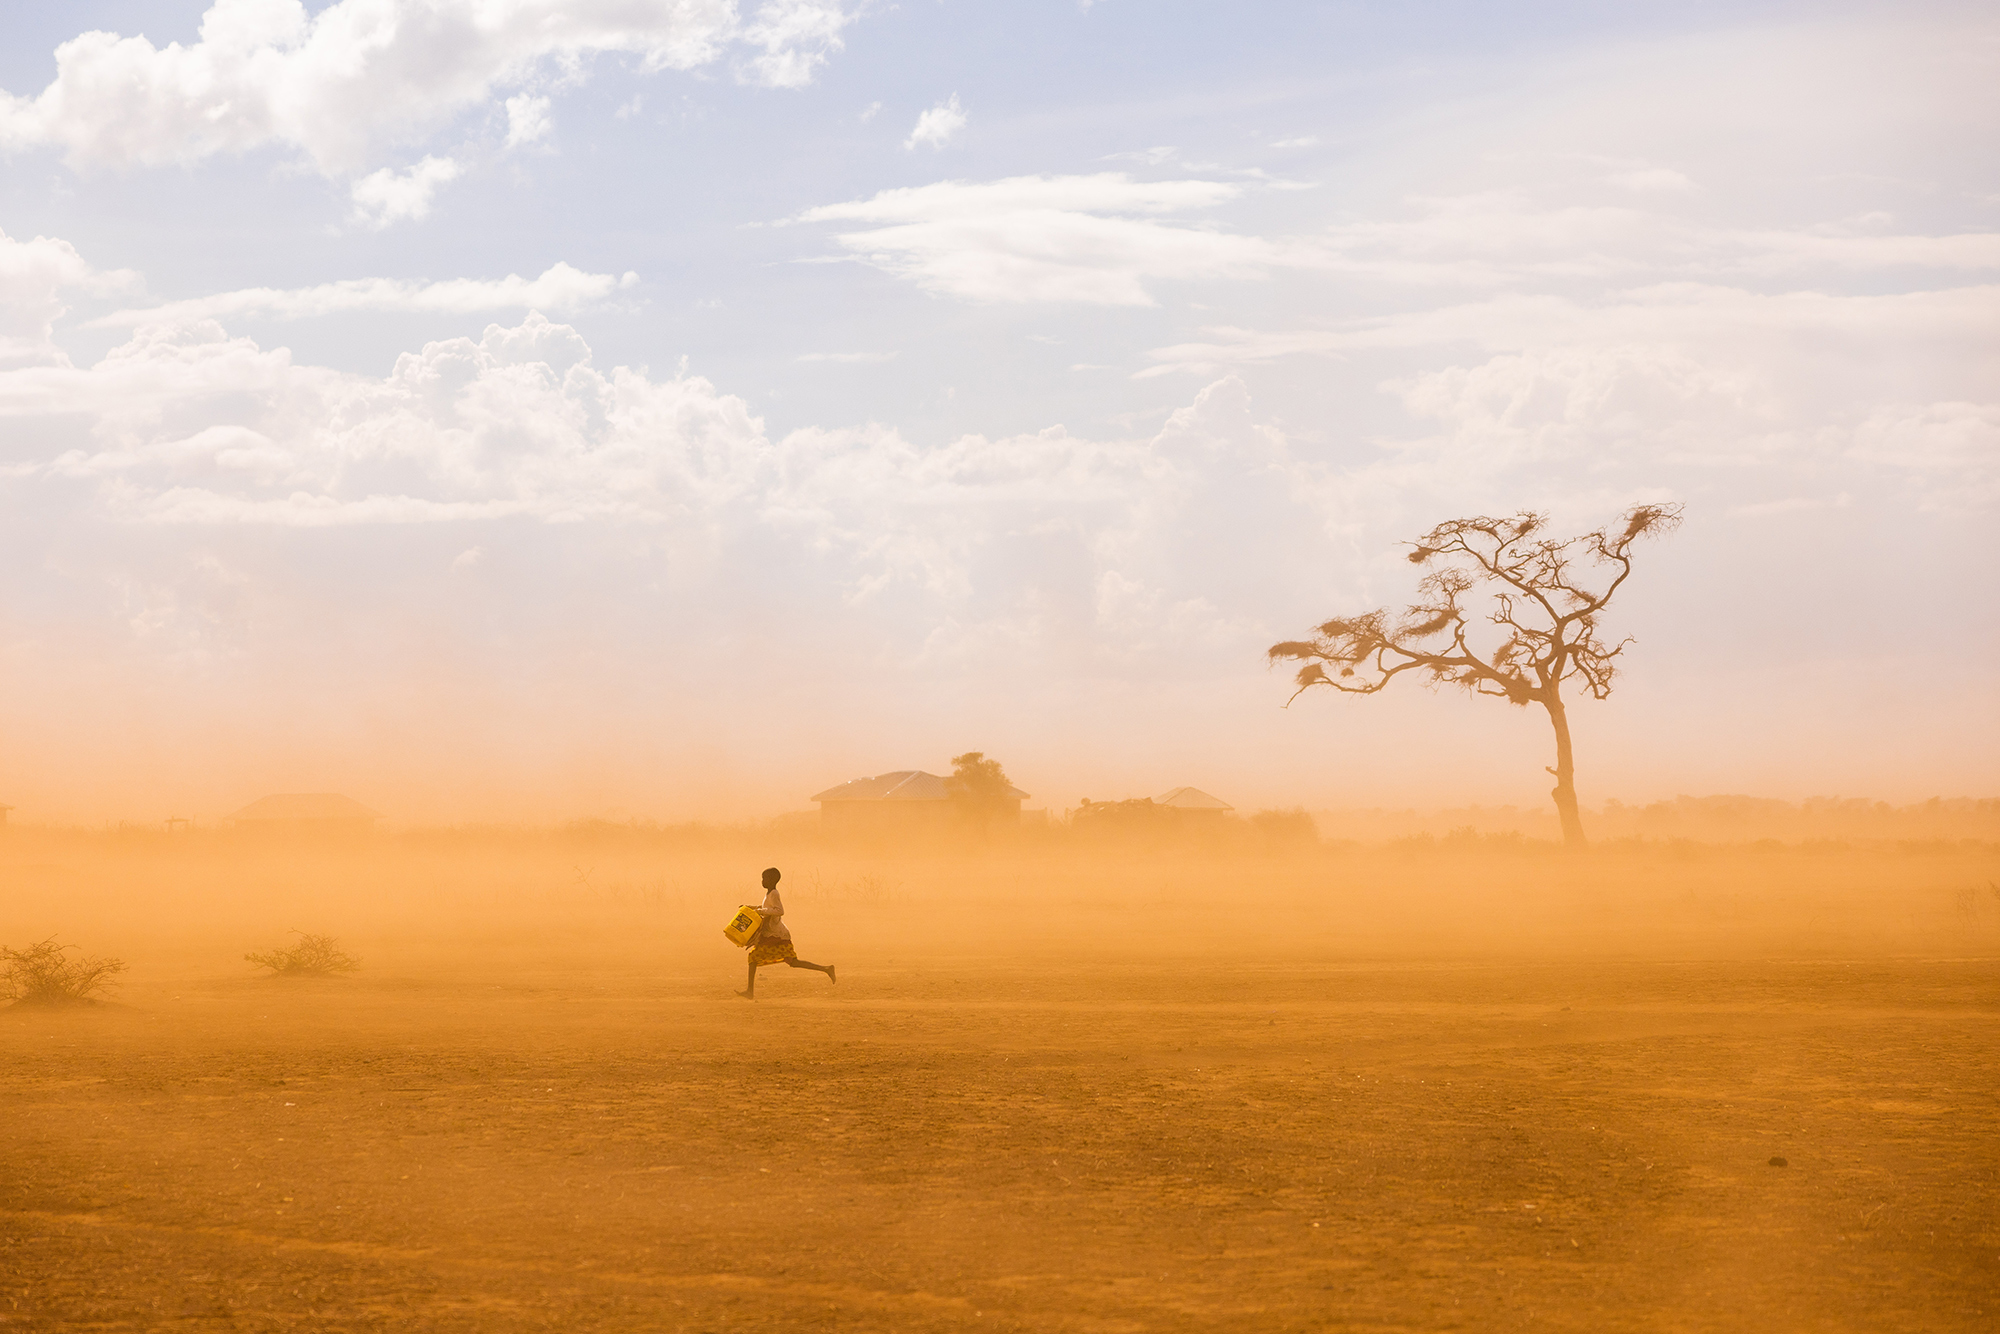 Desert landscape with a girl running